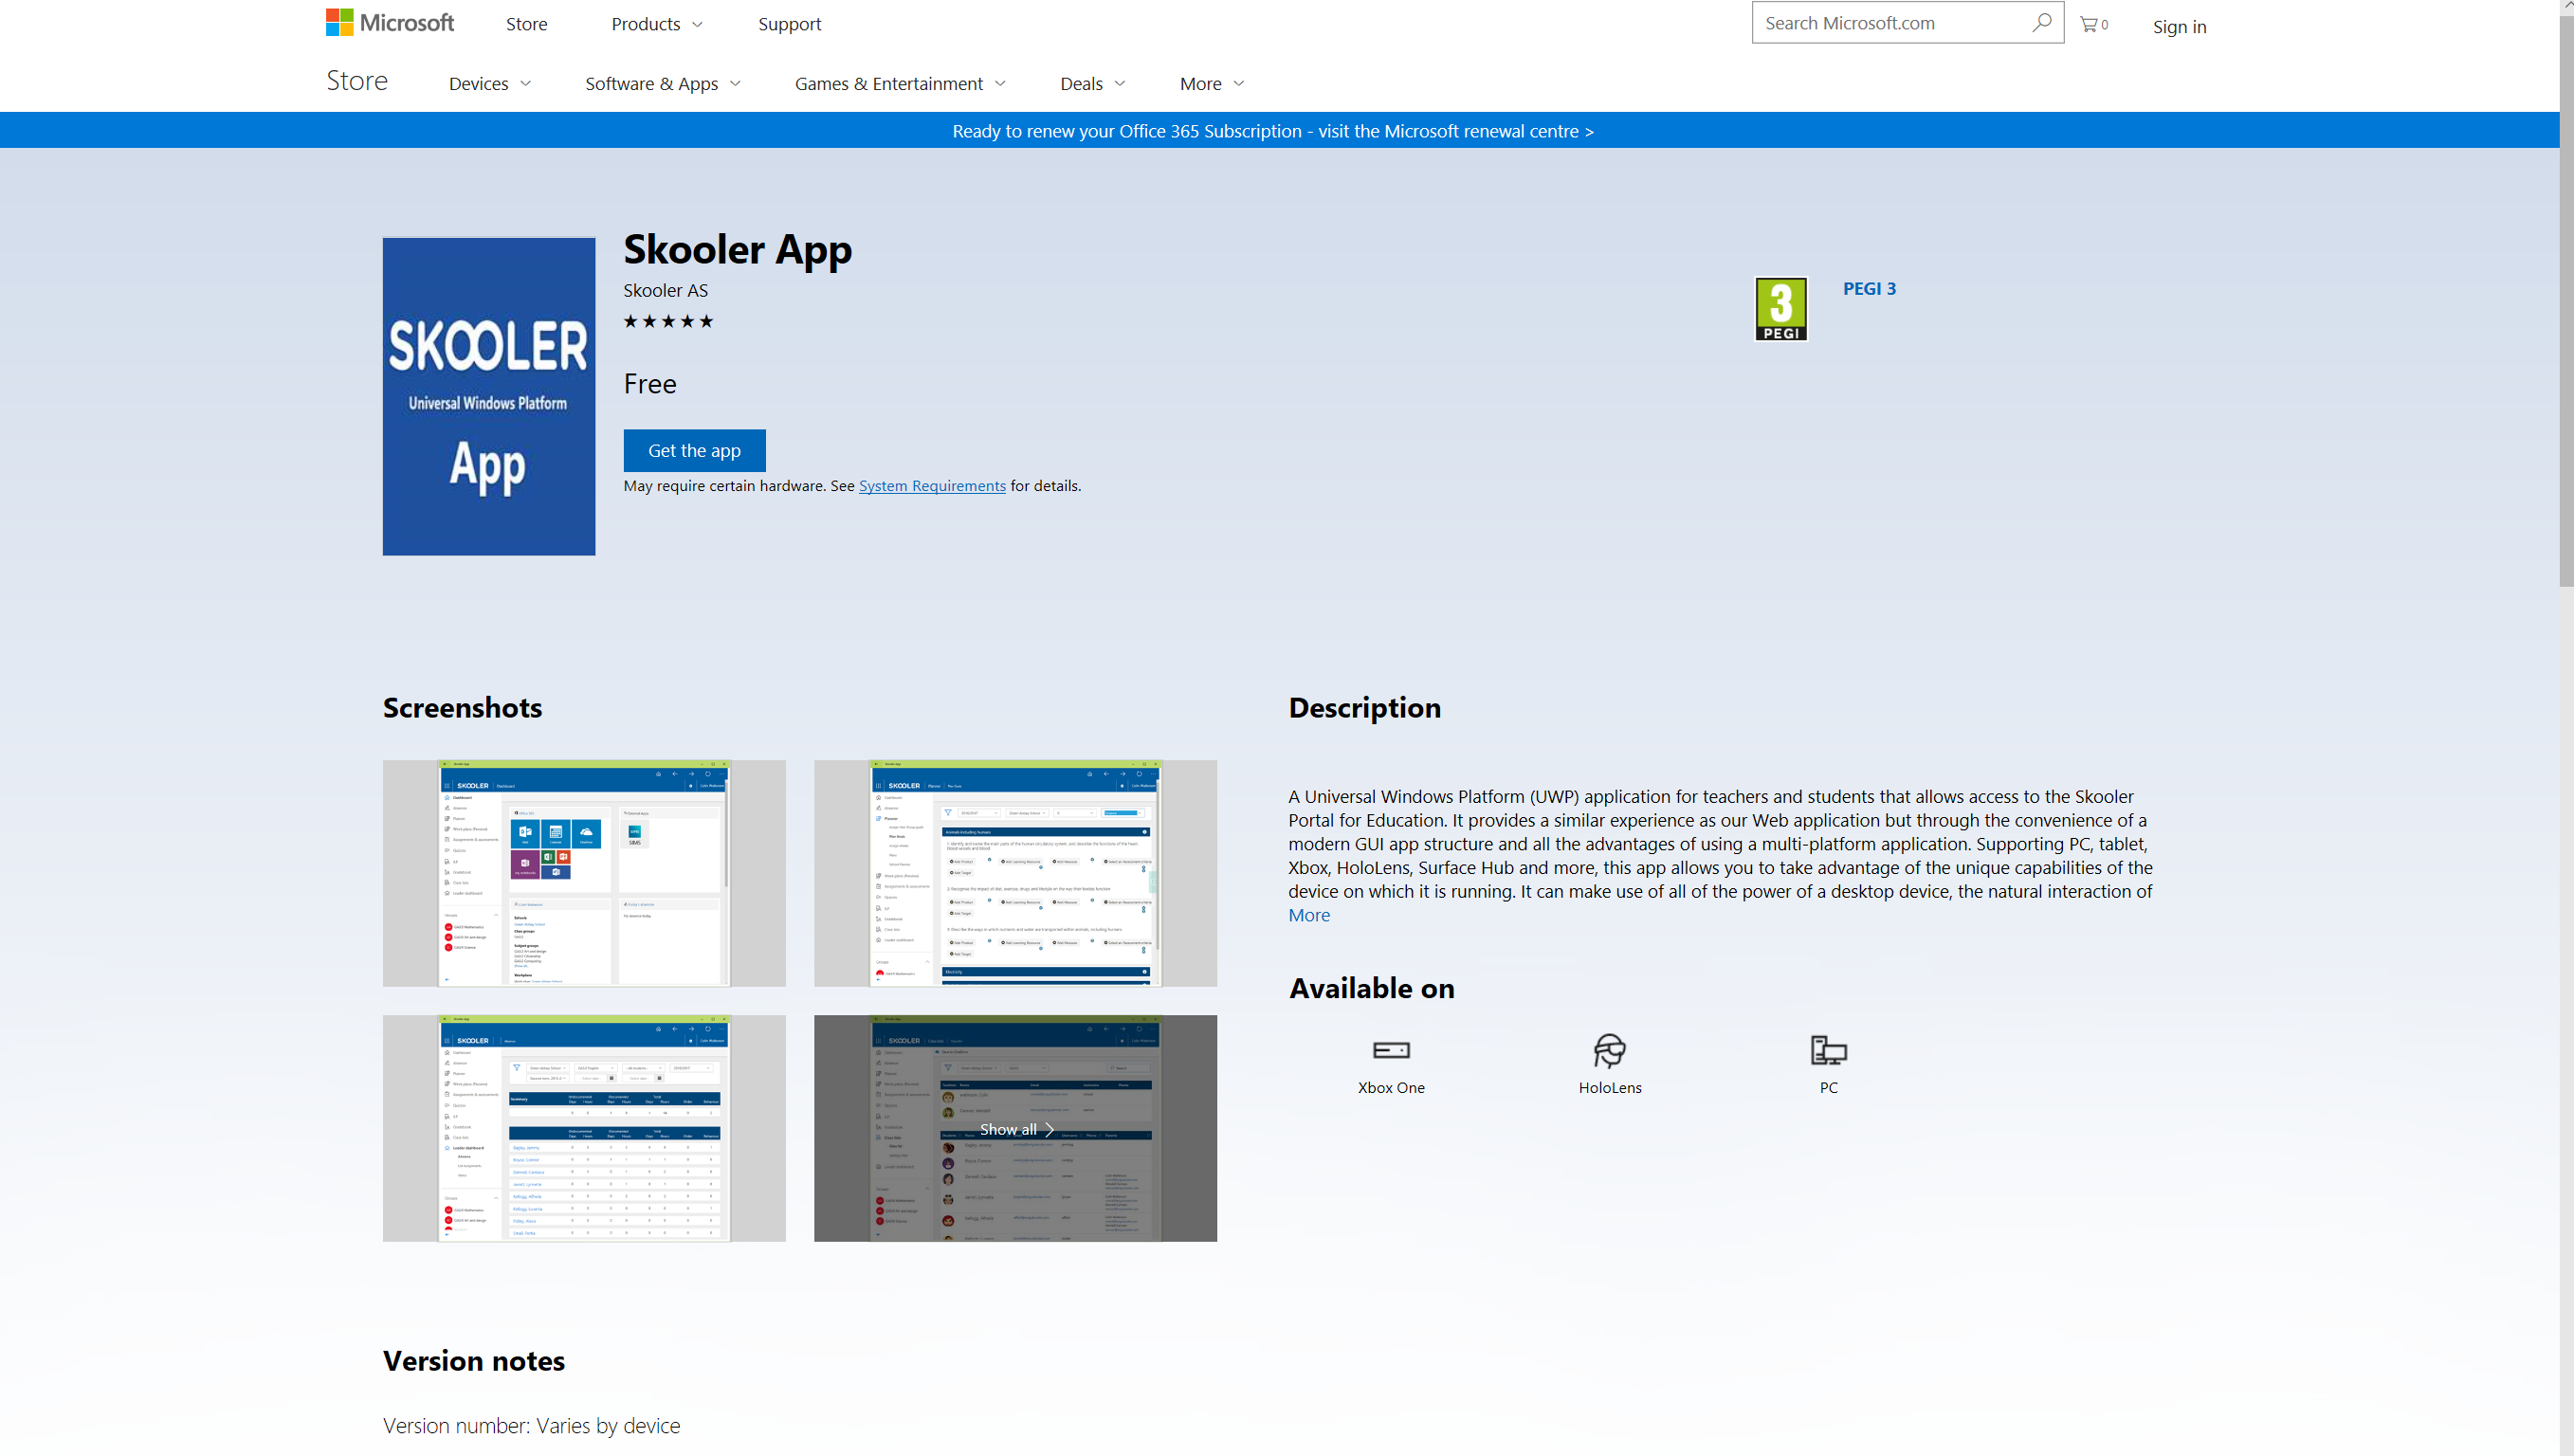 Skooler App Store Image